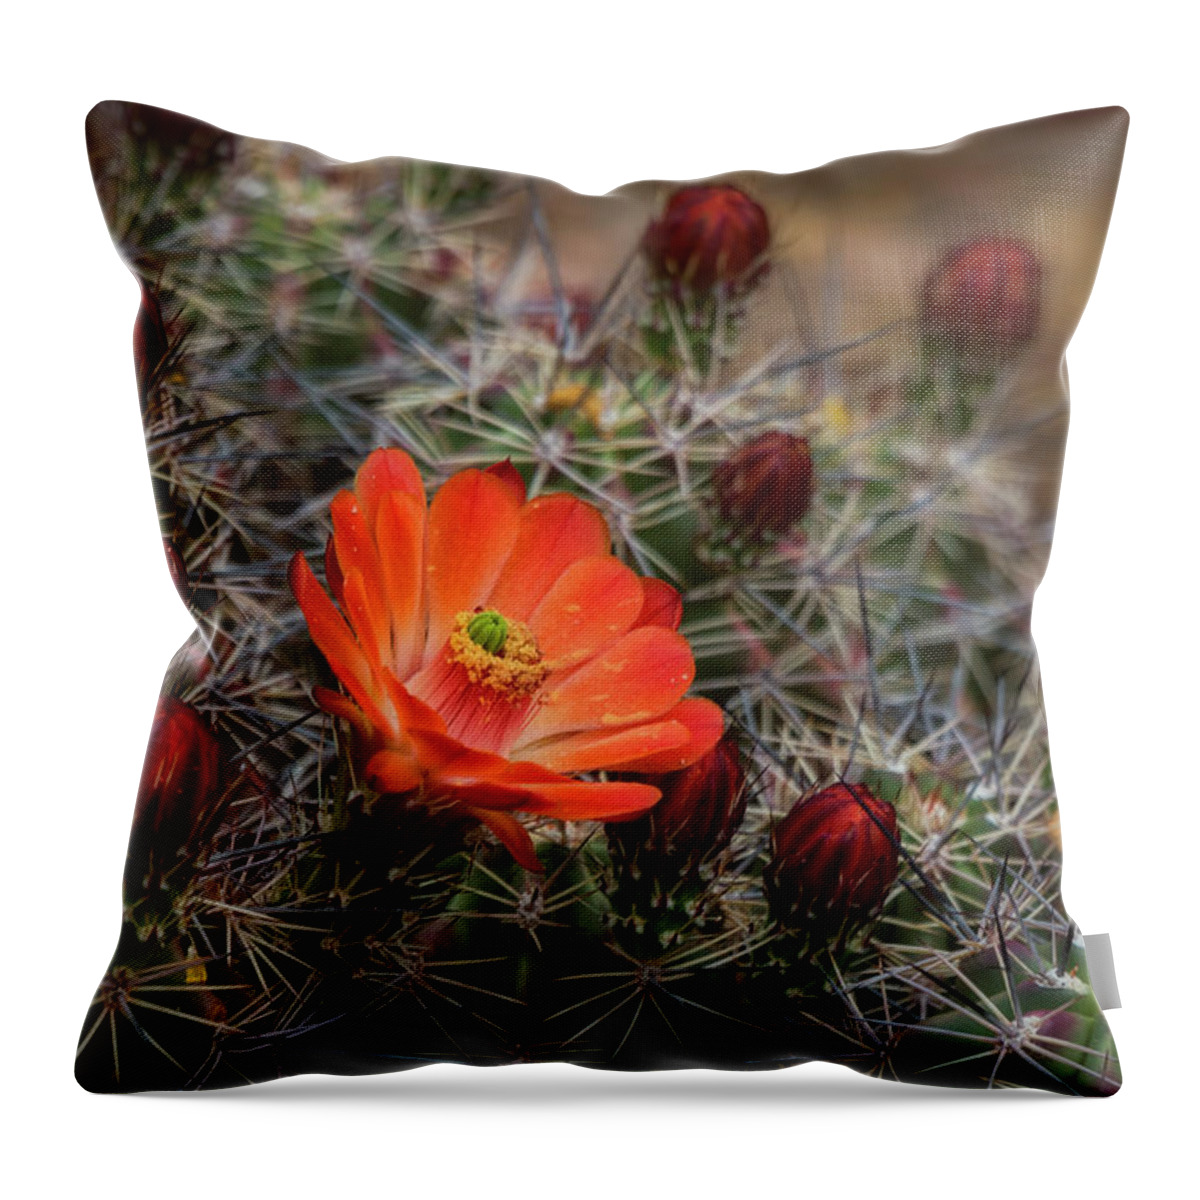 Arizona Throw Pillow featuring the photograph The First Bloom by Saija Lehtonen